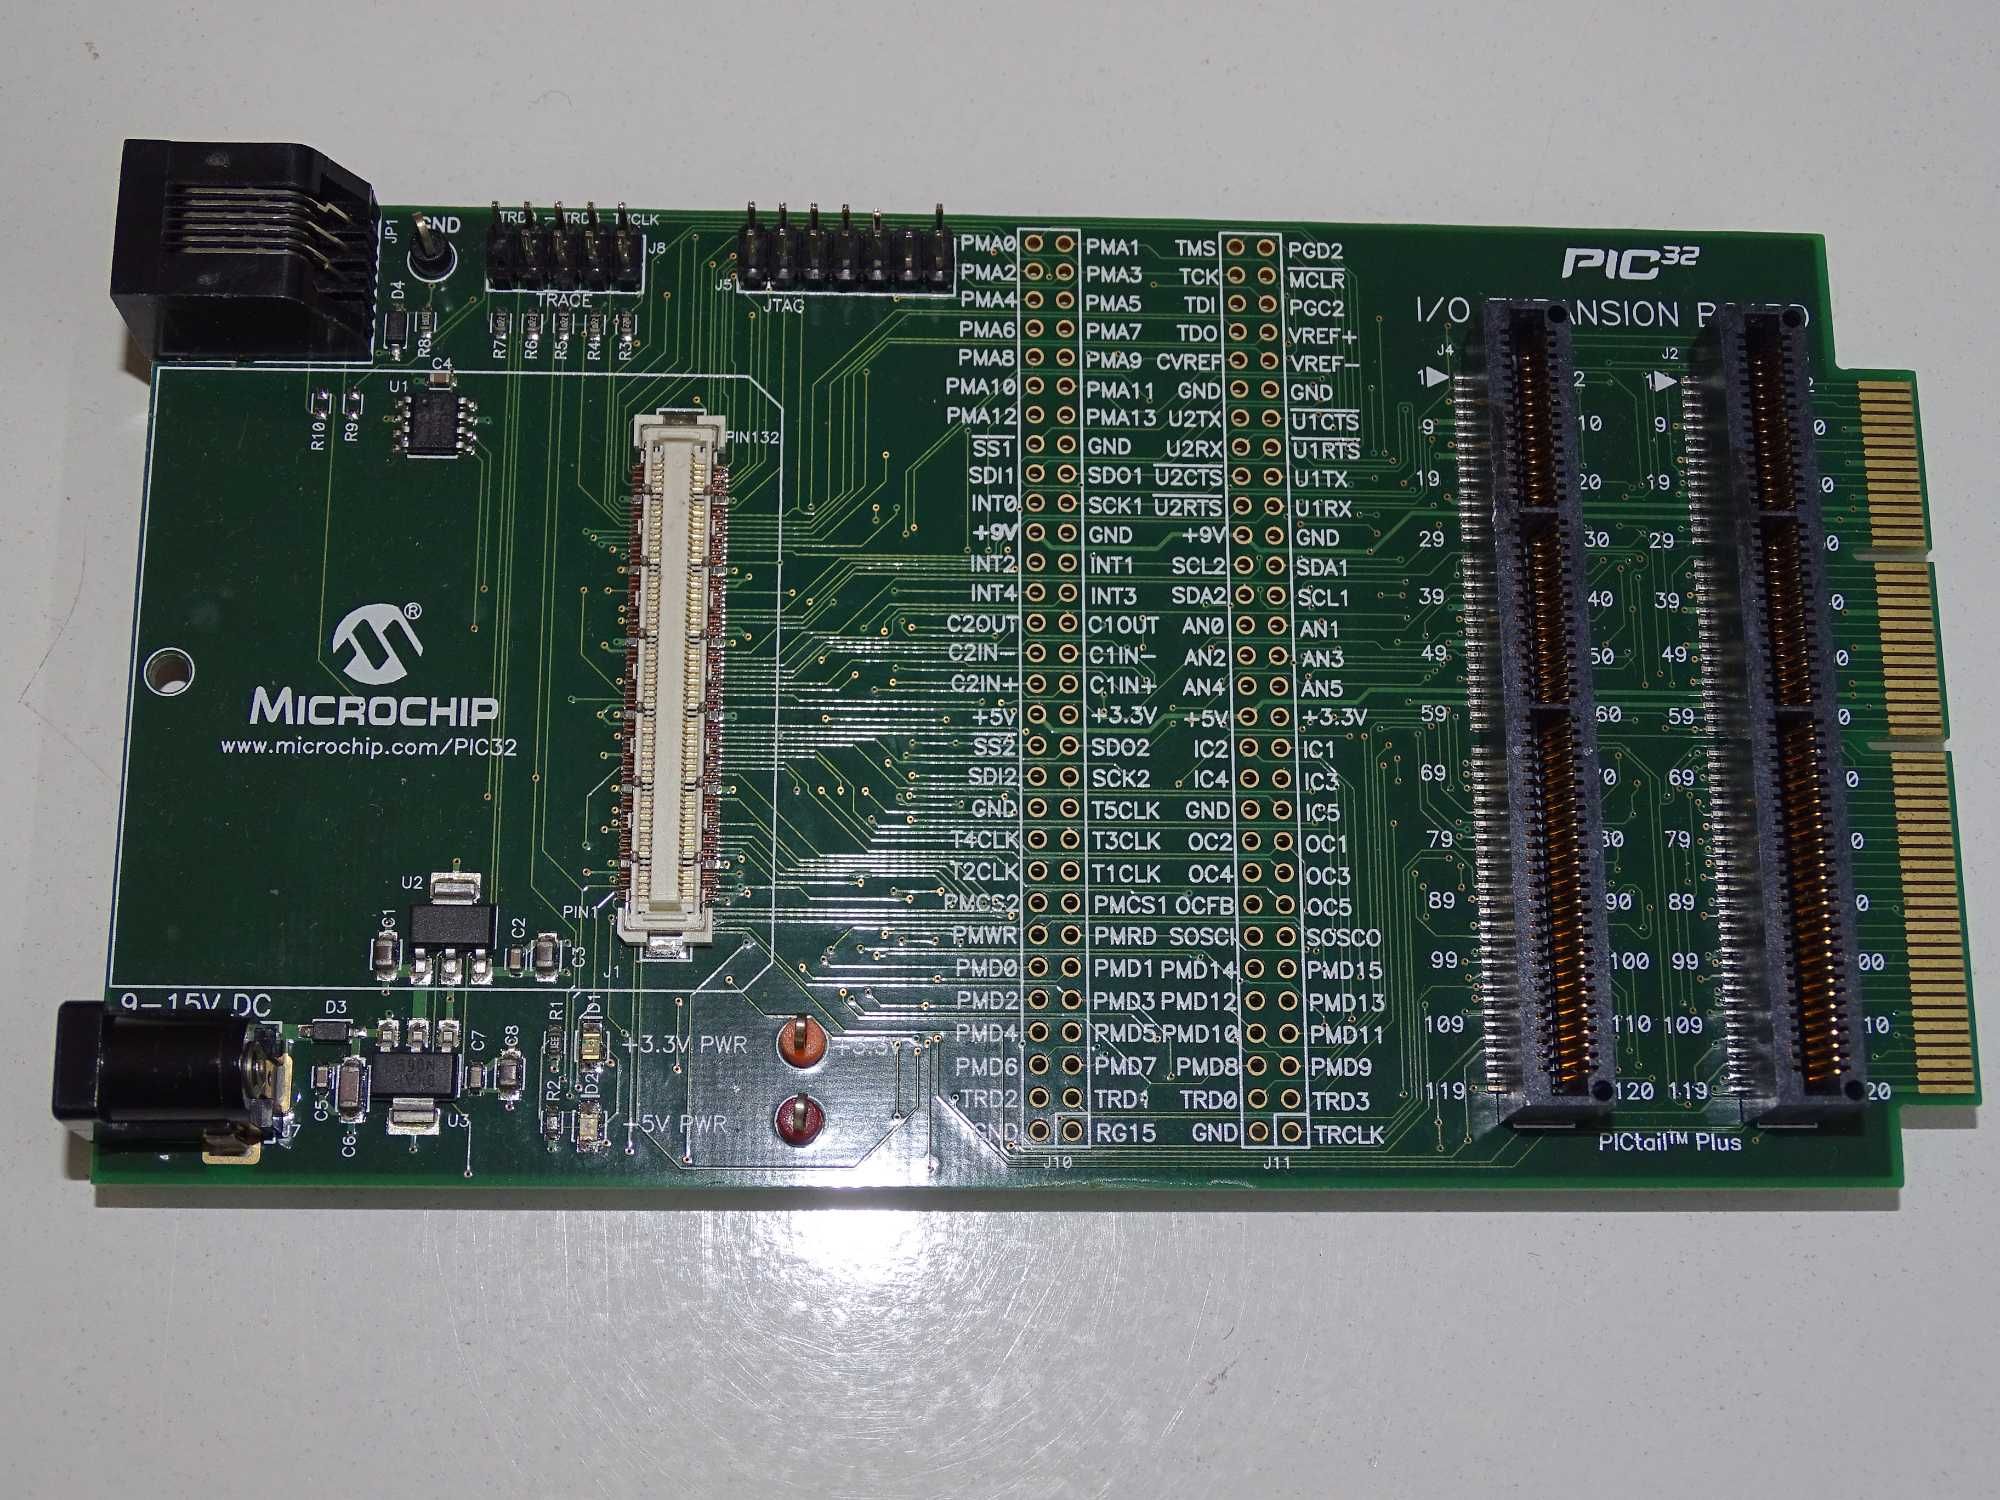 Kits Microchip vários para desenvolvimento eletrónica